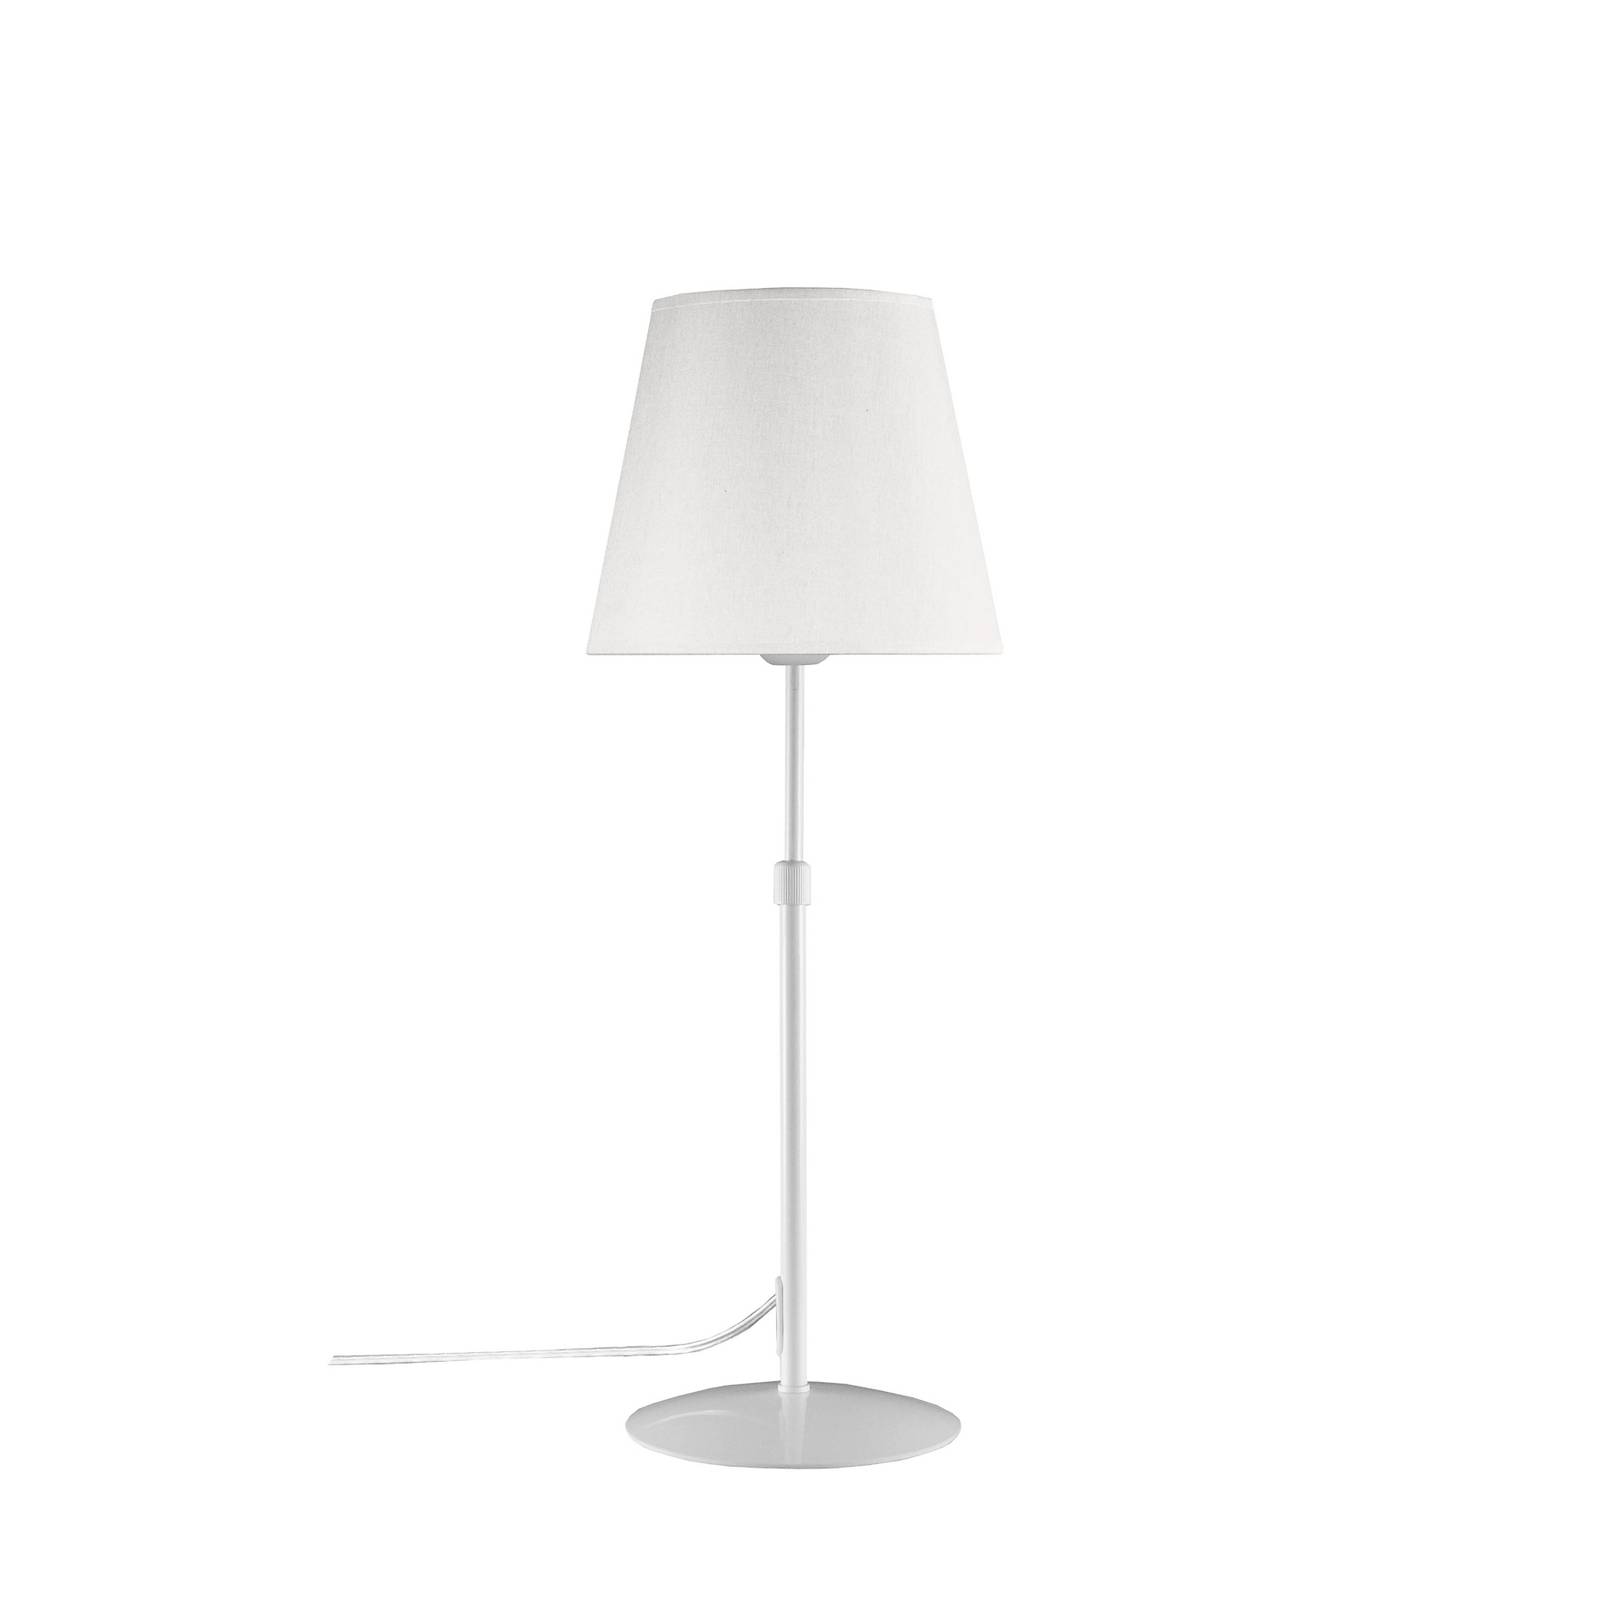 Aluminor Store asztali lámpa, fehér/fehér